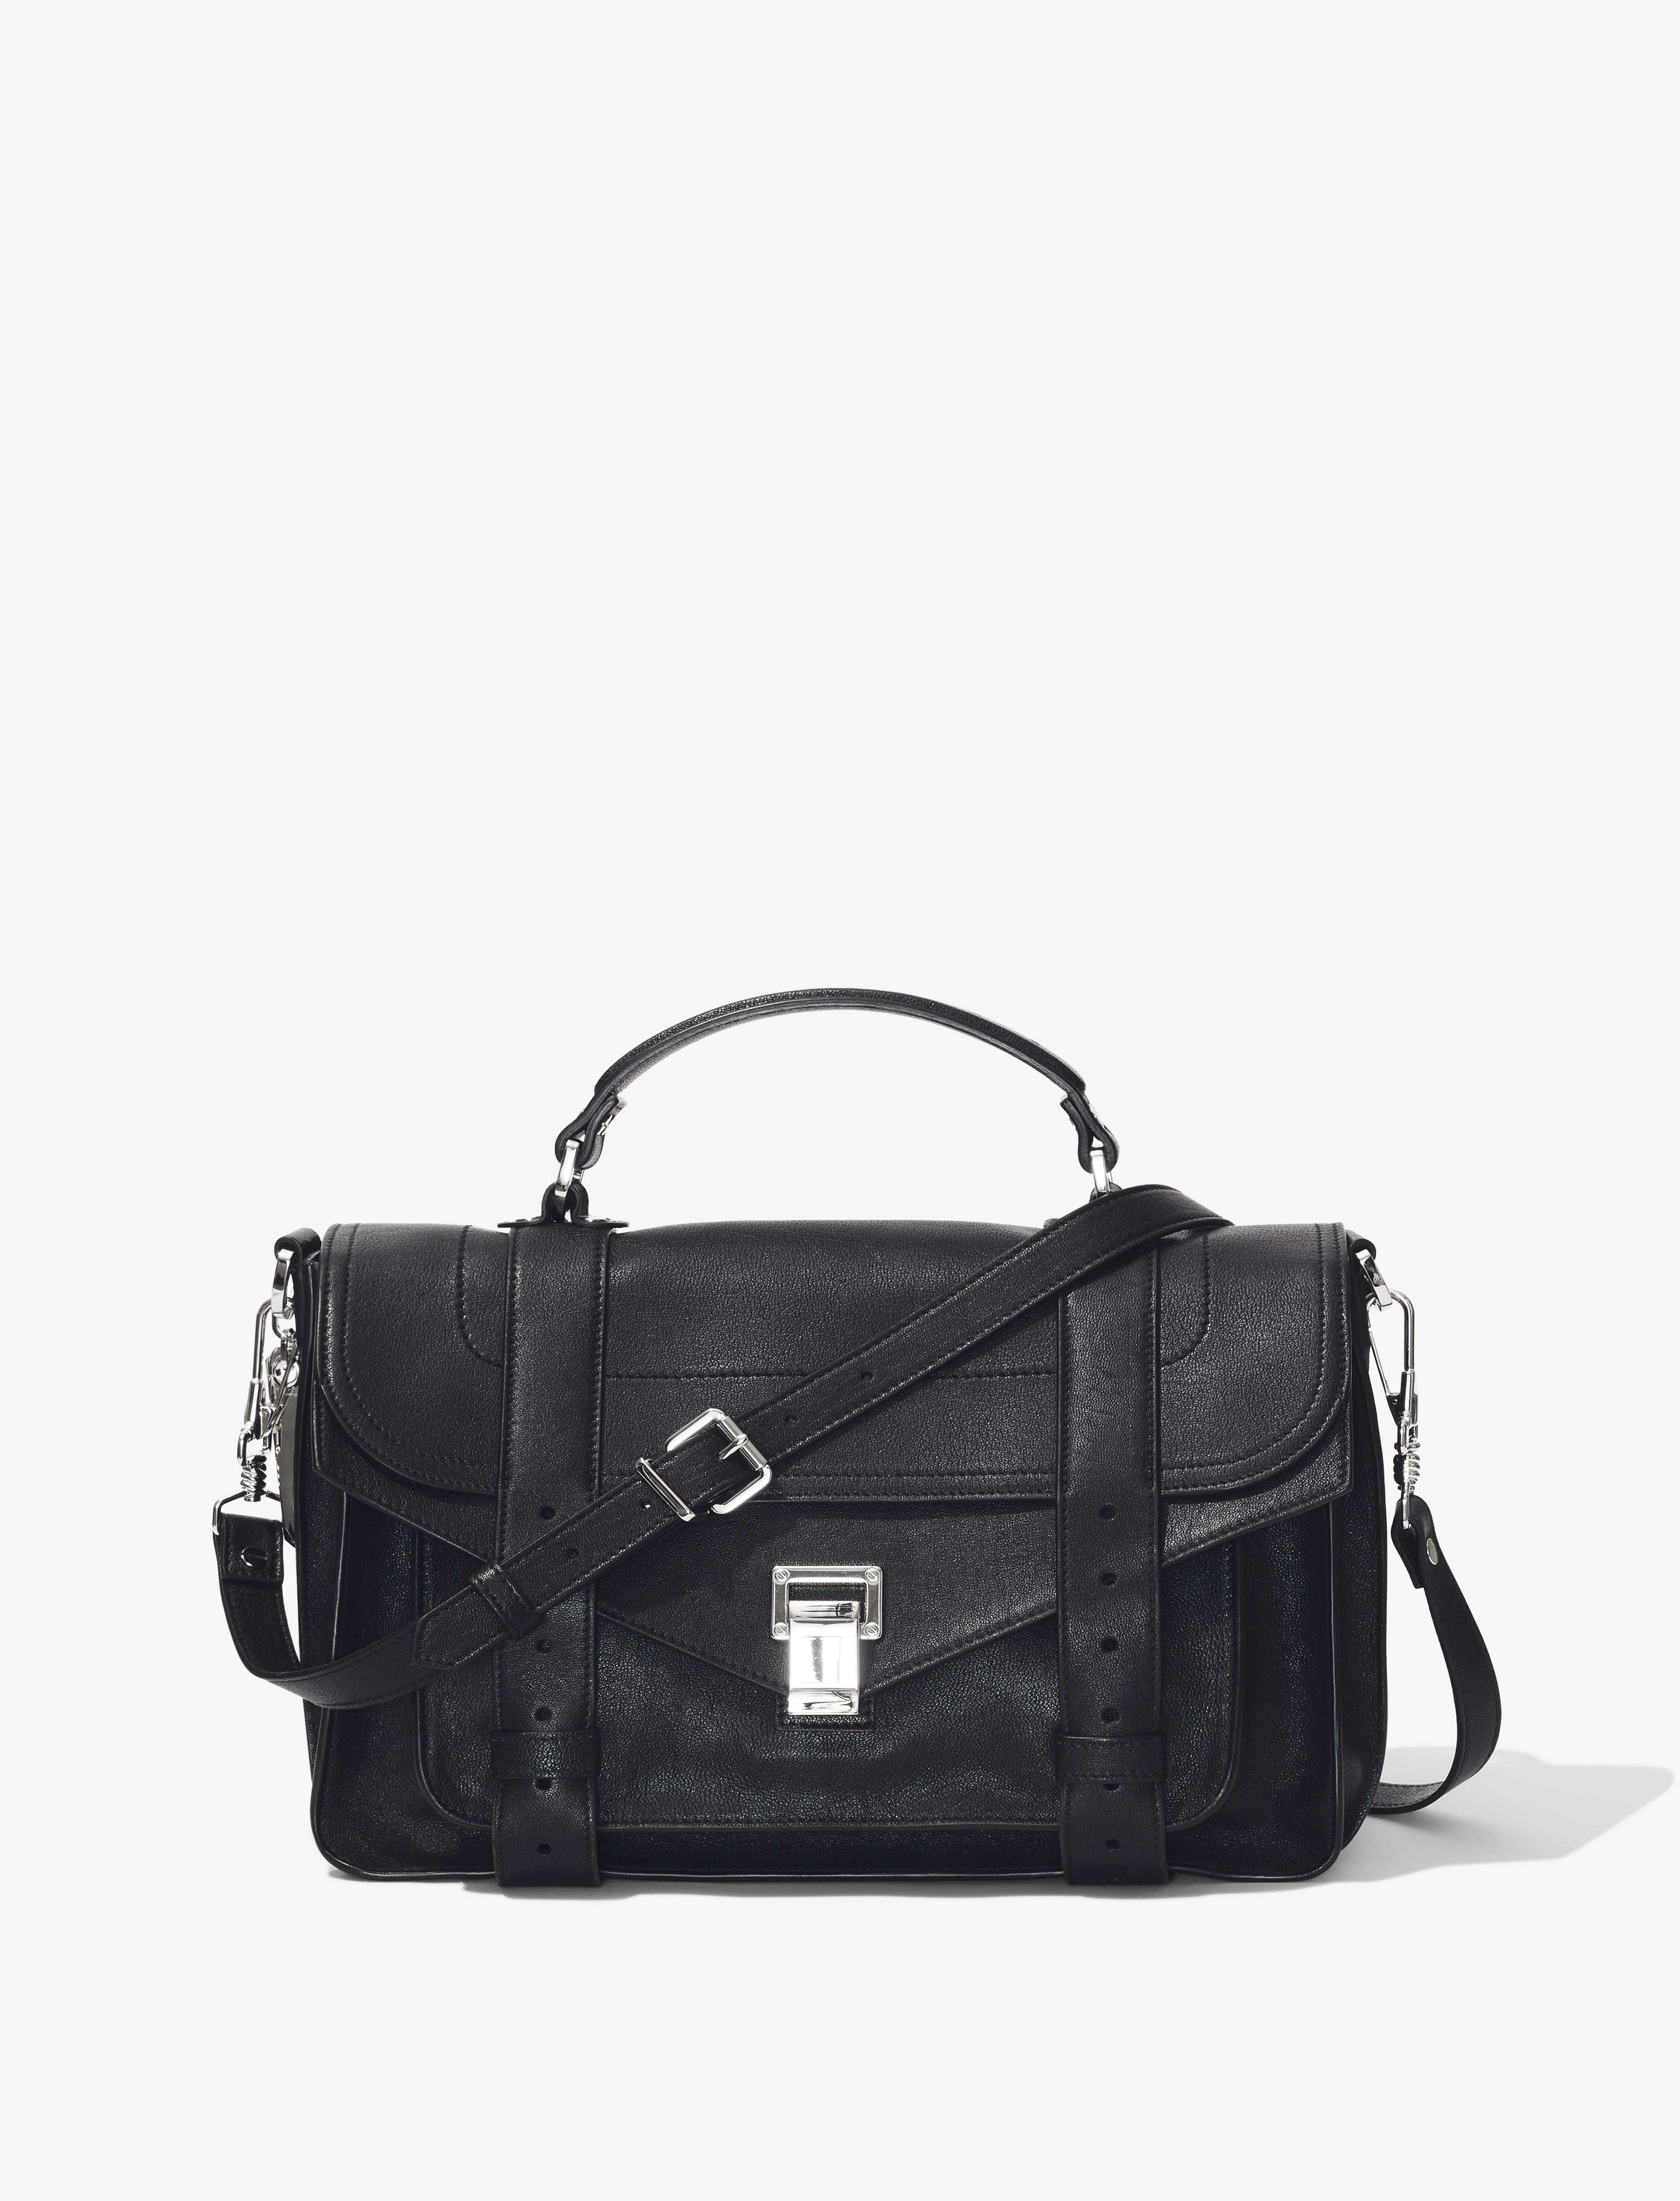 Proenza Schouler PS1 Medium Bag - Black | Proenza Schouler